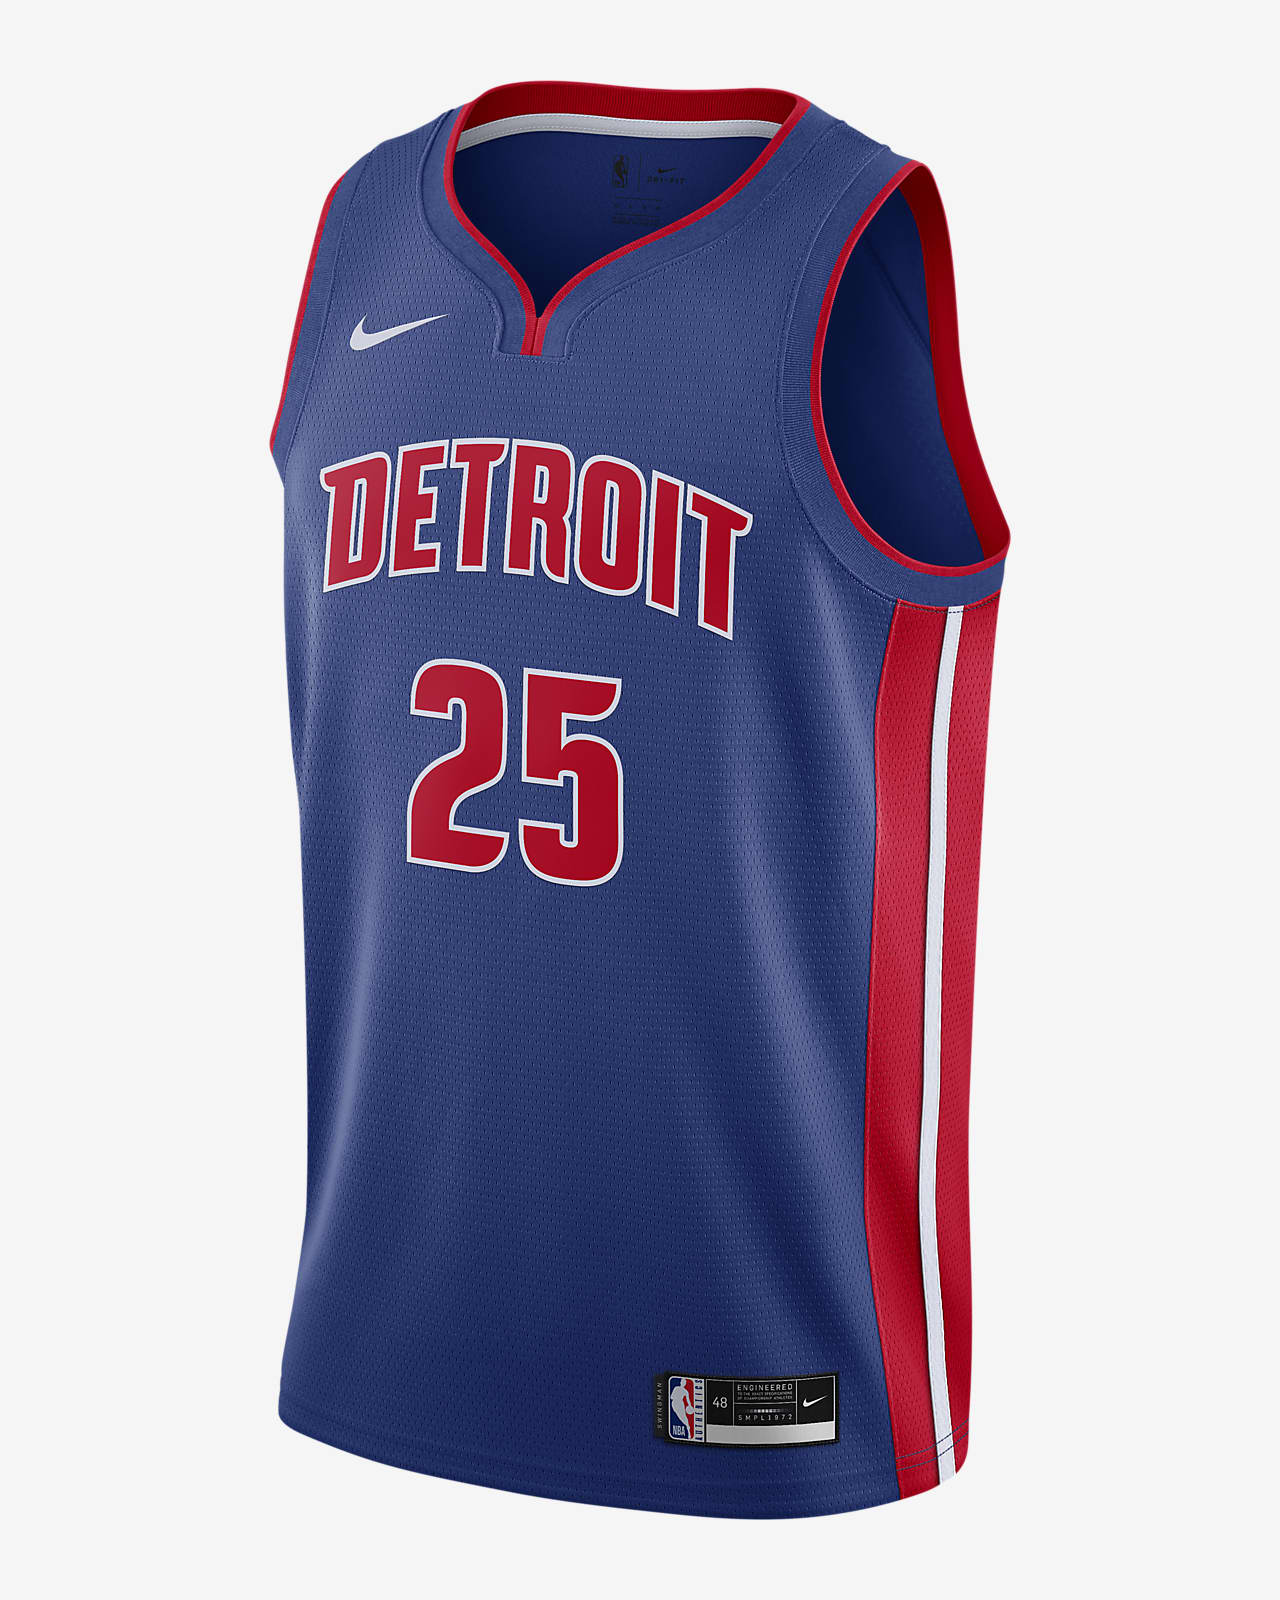 2020 赛季底特律活塞队 Icon Edition Nike NBA Swingman Jersey 男子球衣